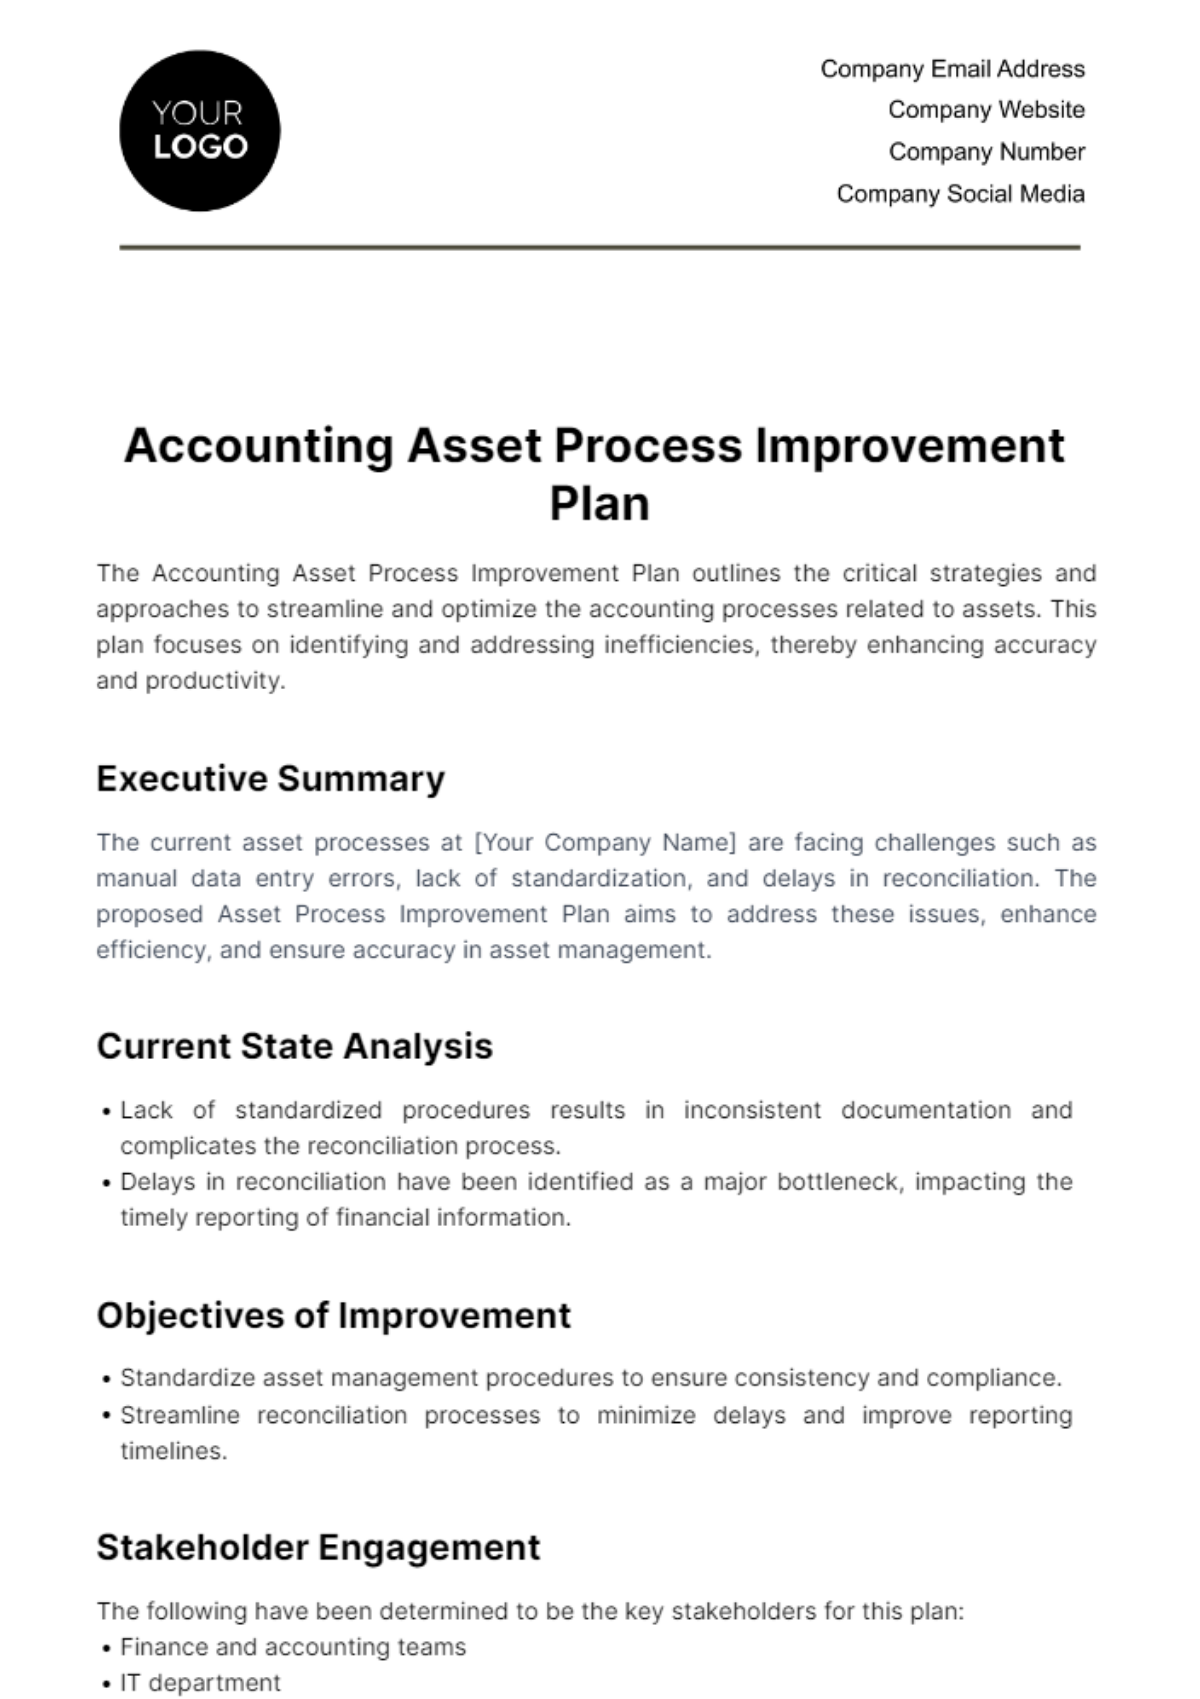 Accounting Asset Process Improvement Plan Template